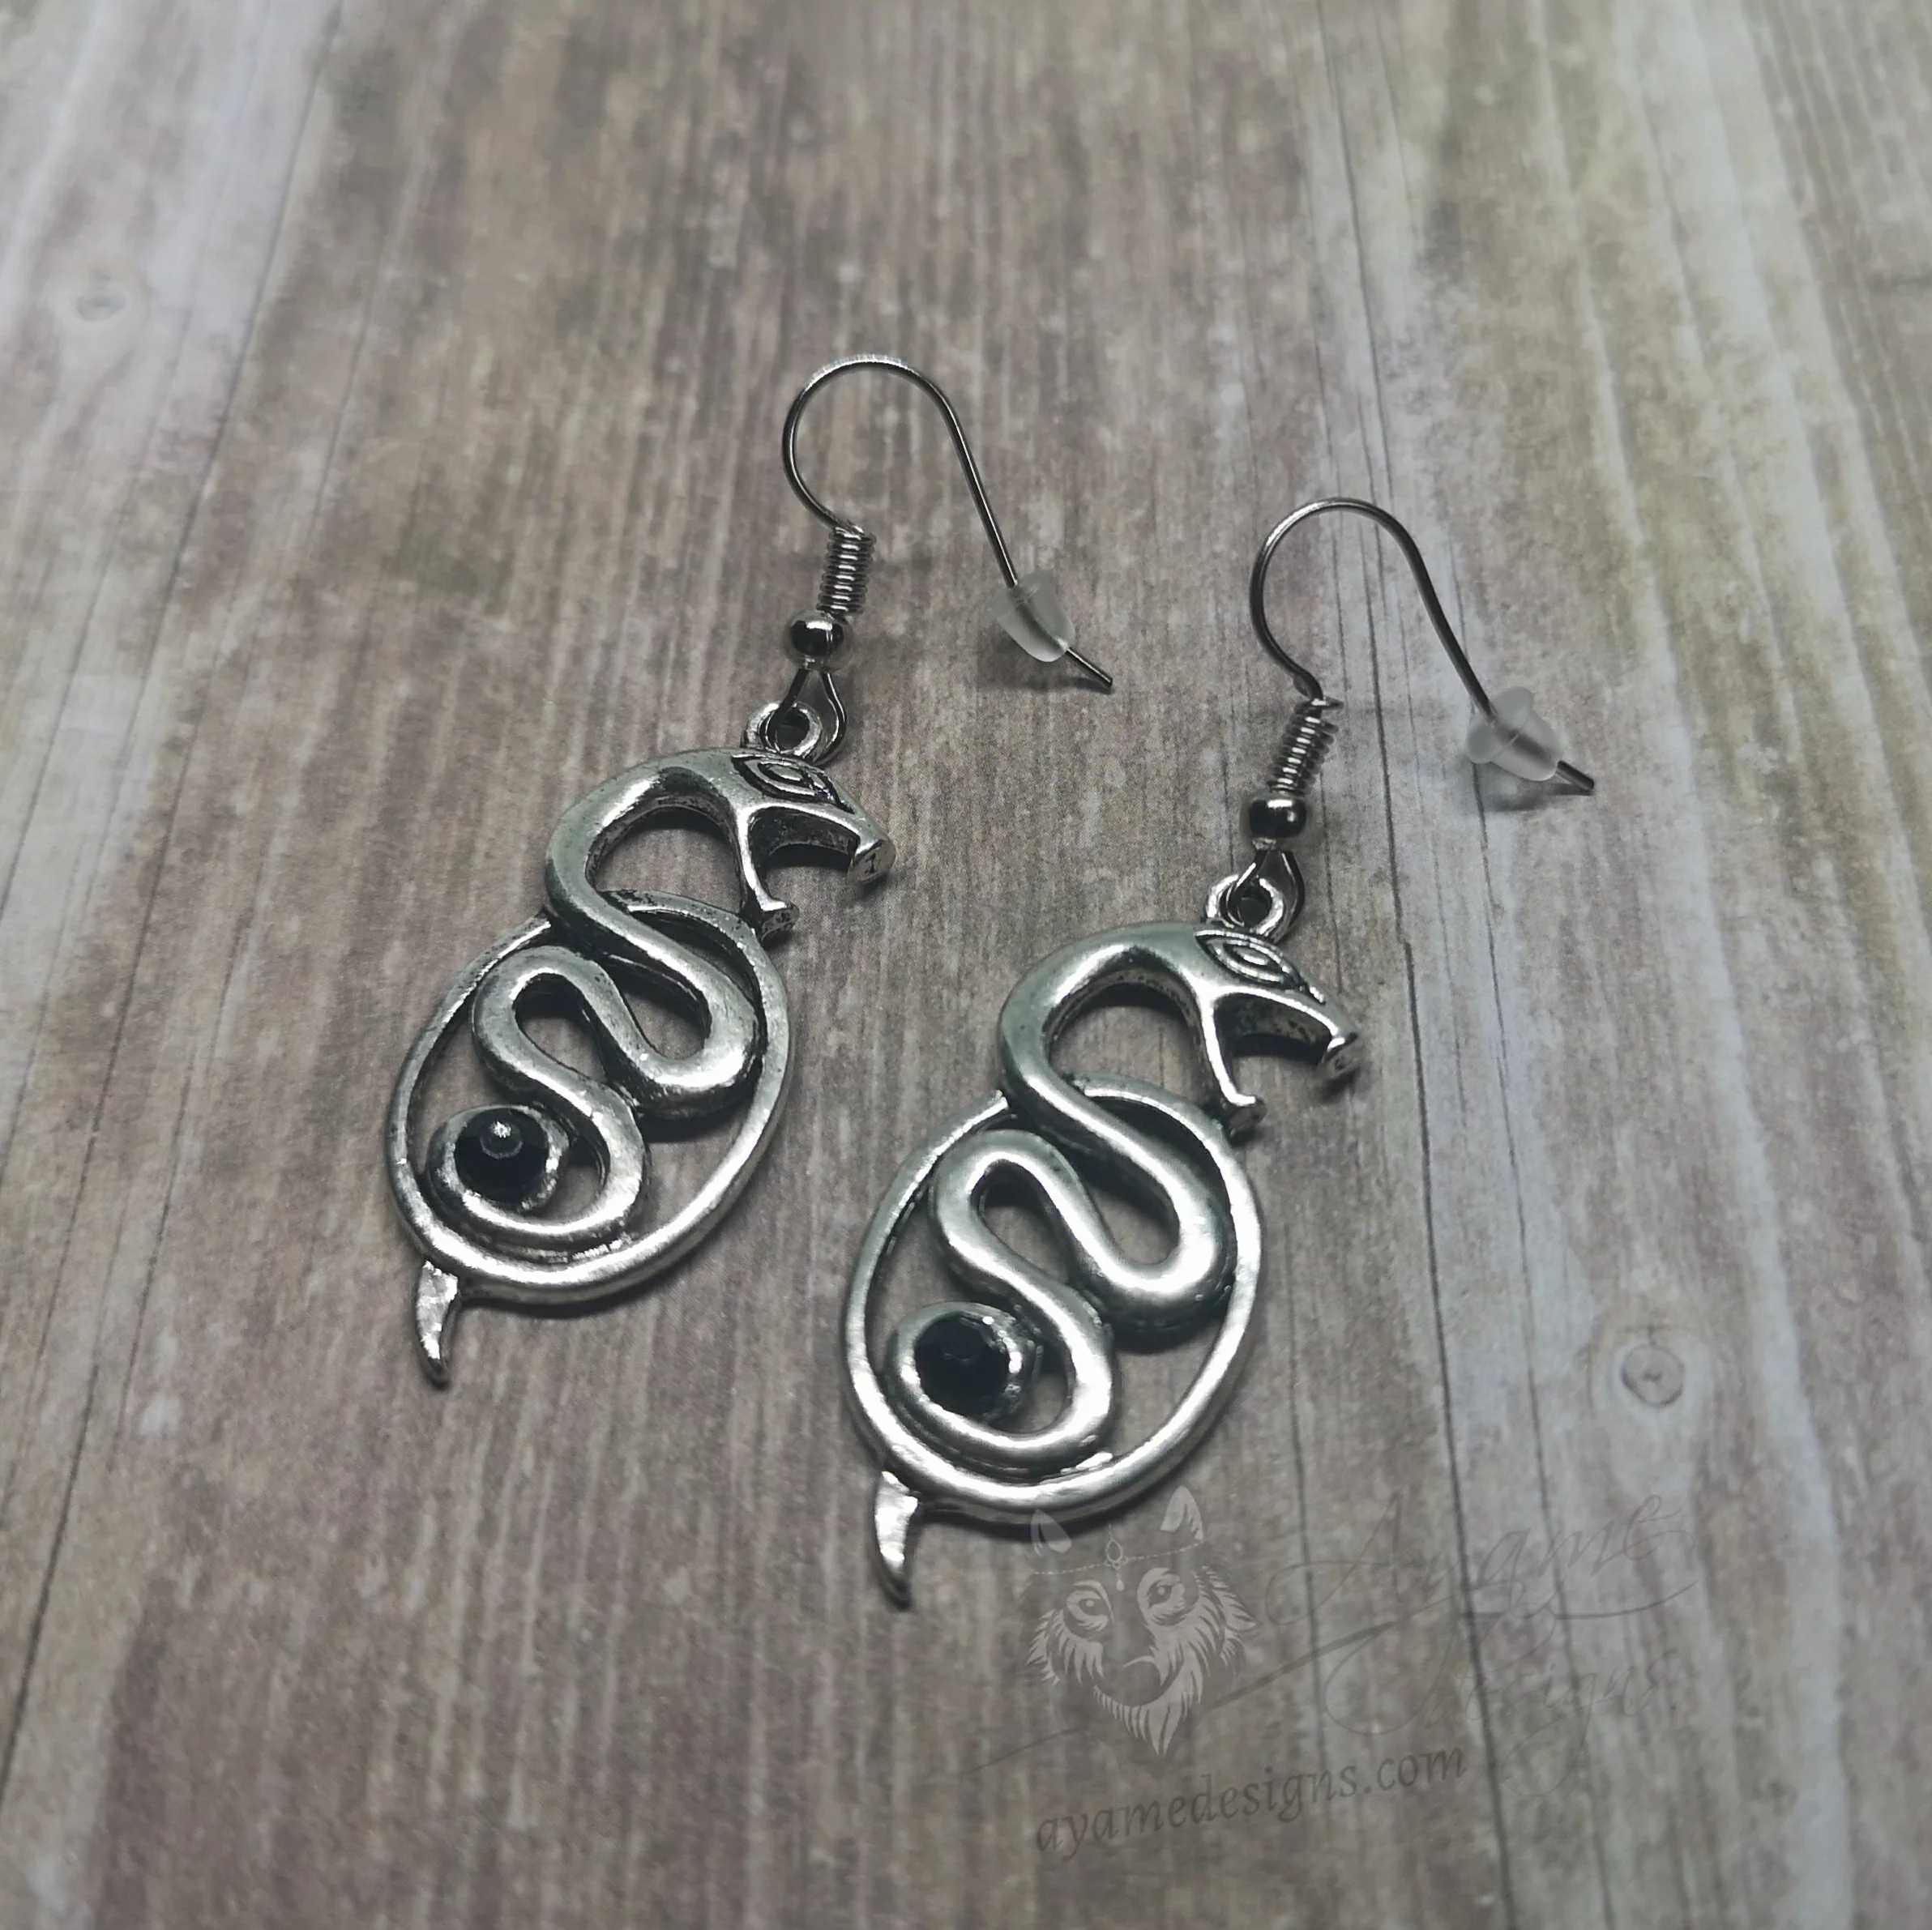 Handmade earrings with snake charms on stainless steel earring hooks